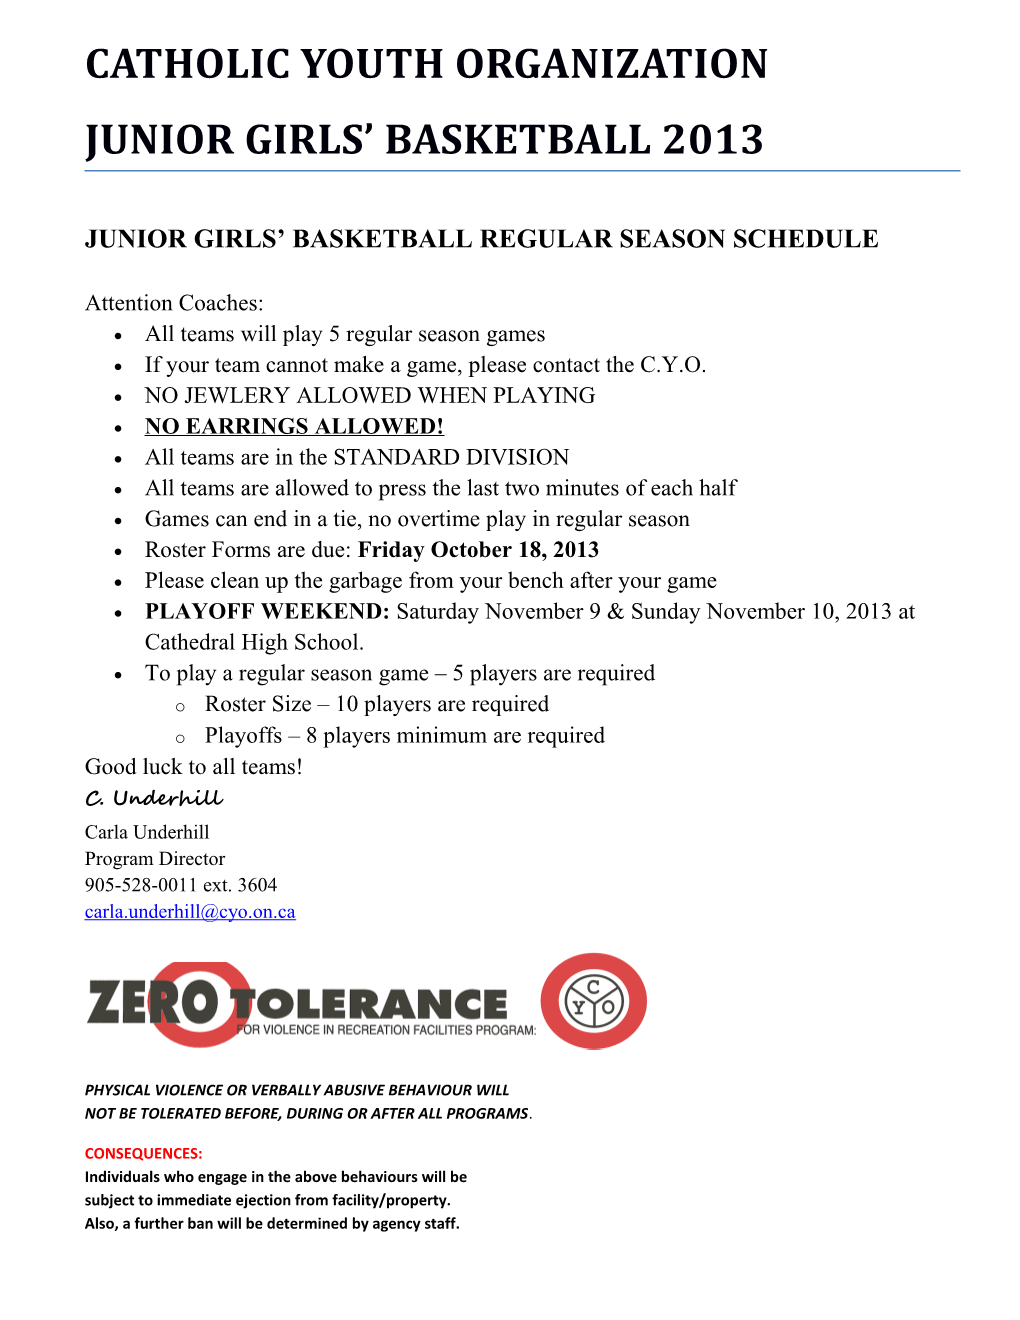 Junior Girls Basketball Regular Season Schedule